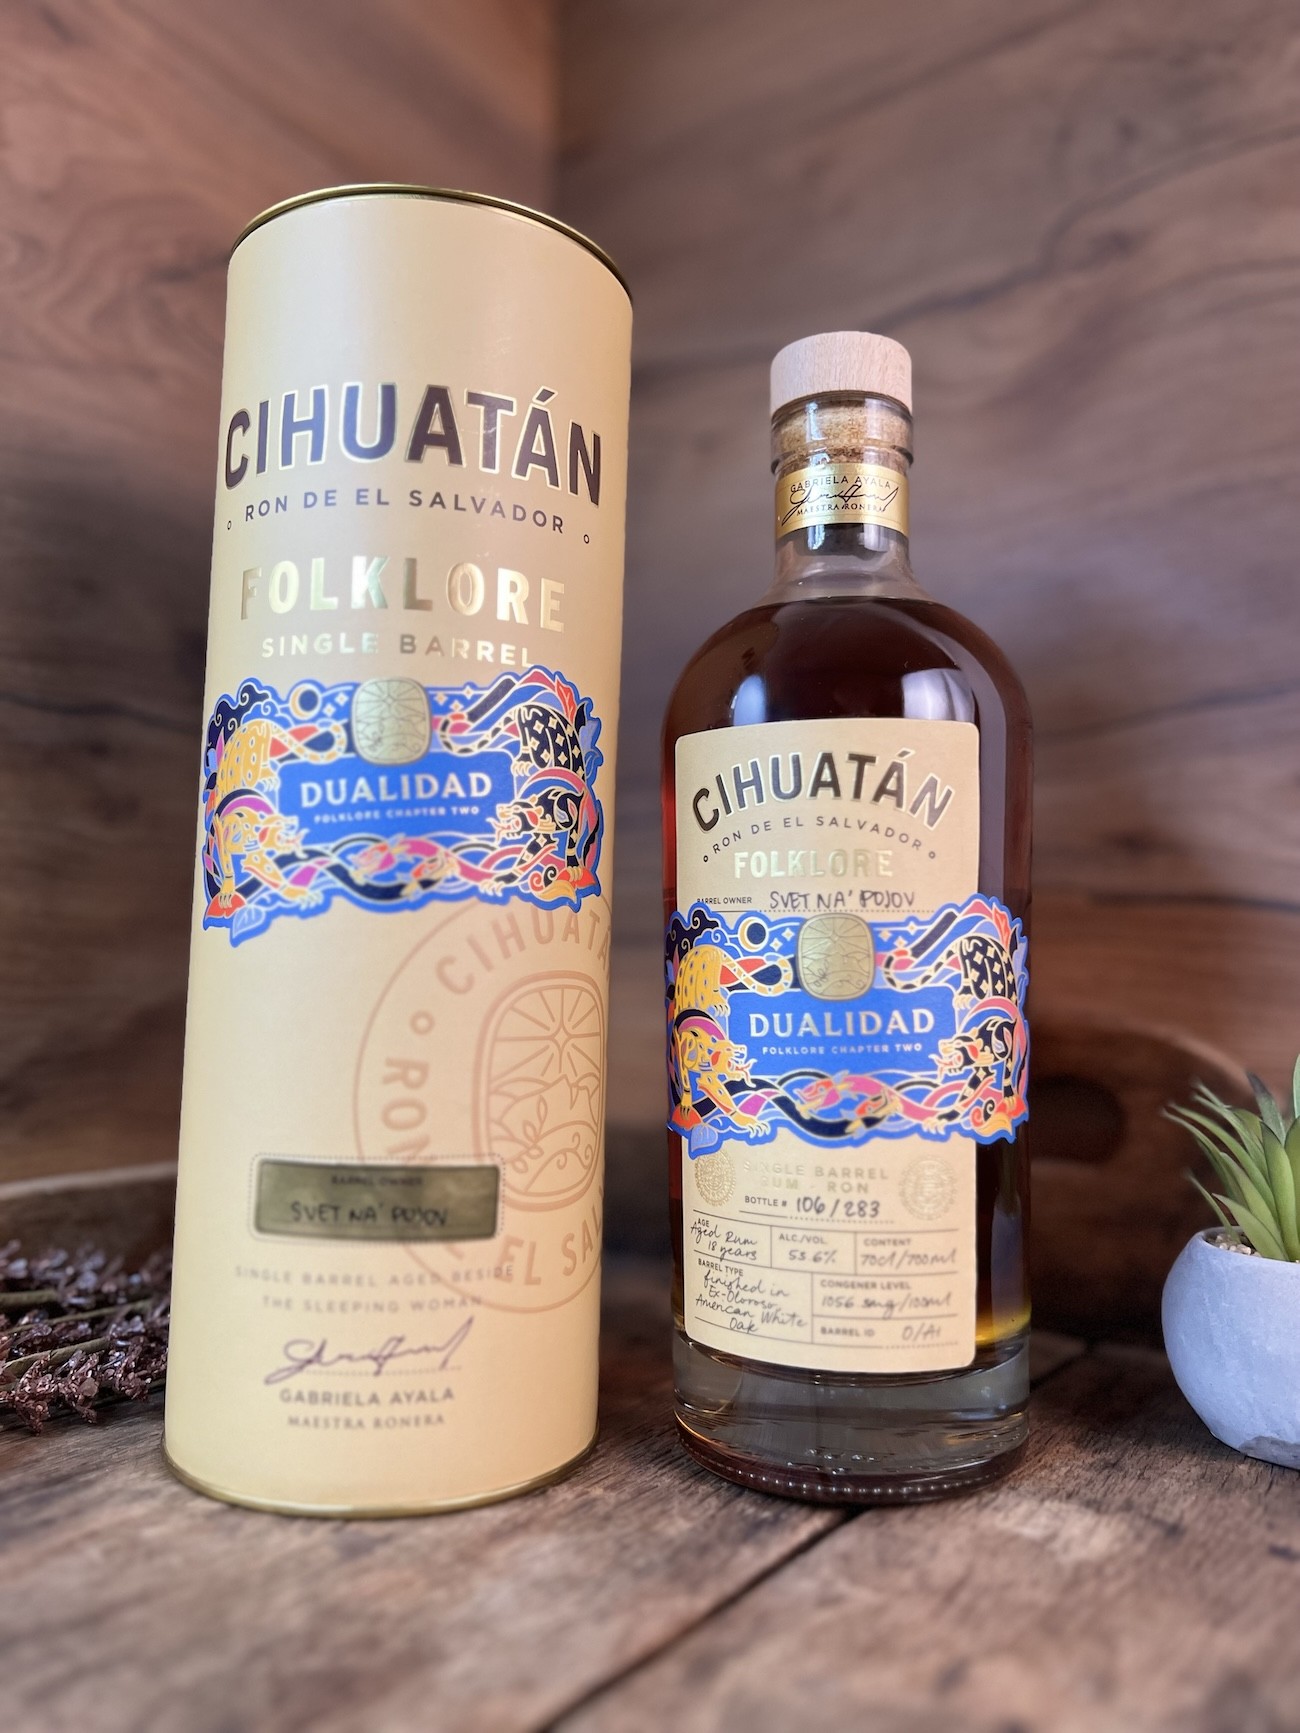 Cihuatán Folklore Dualidad